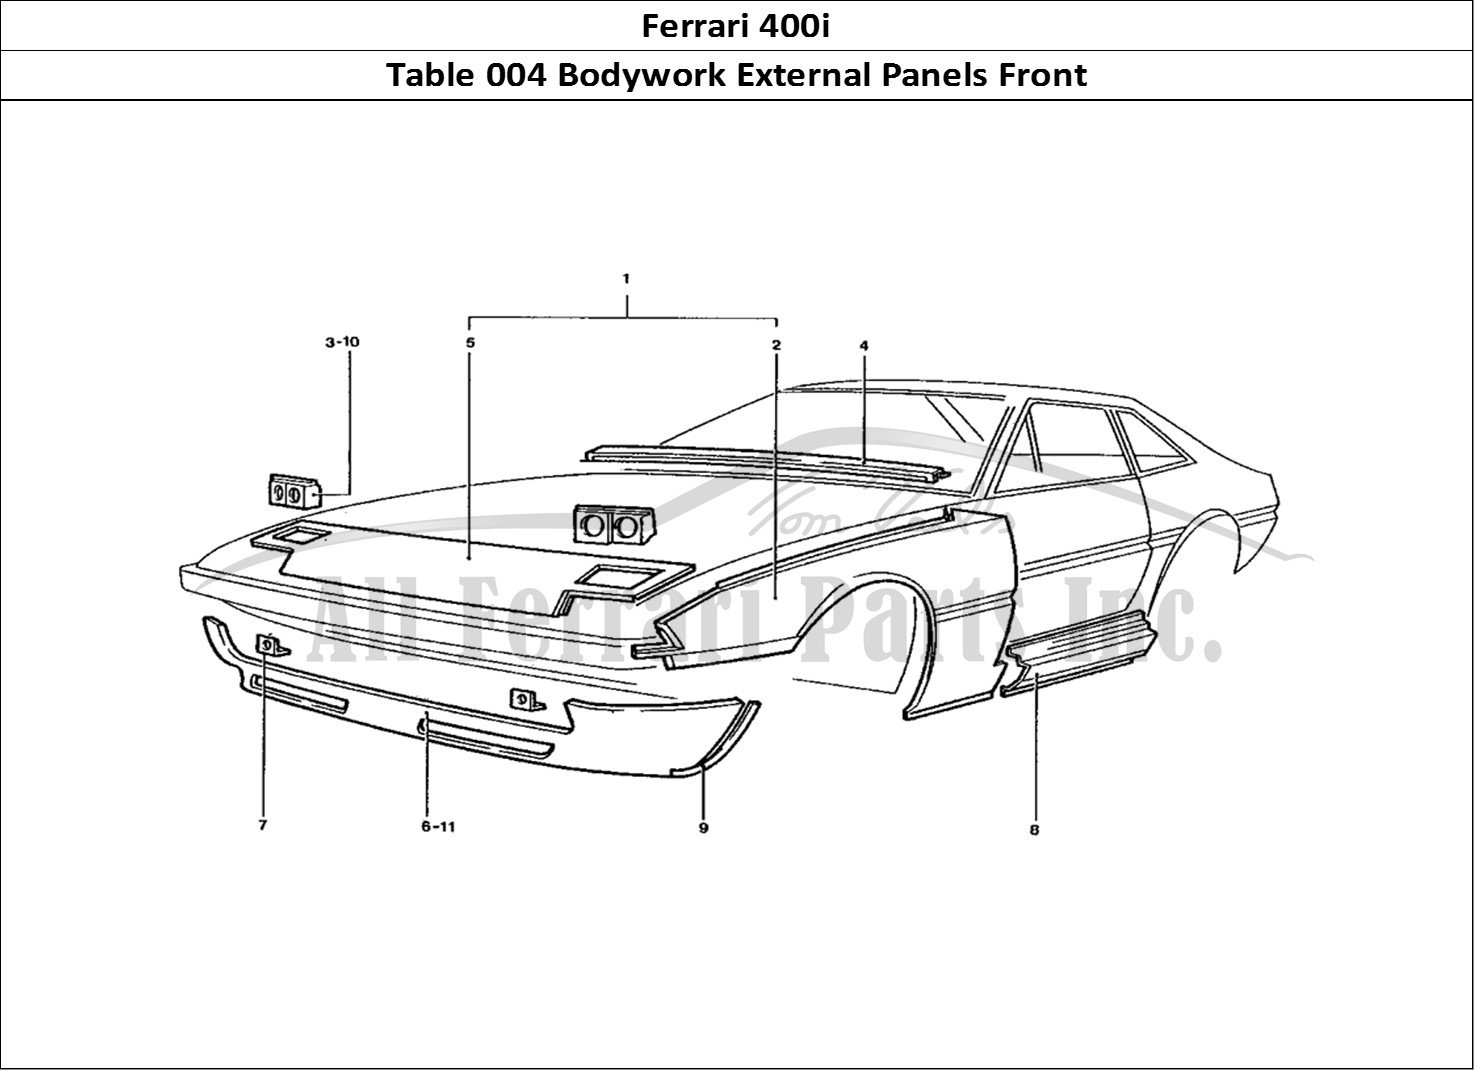 Ferrari Parts Ferrari 400 GT (Coachwork) Page 004 Front End body panels